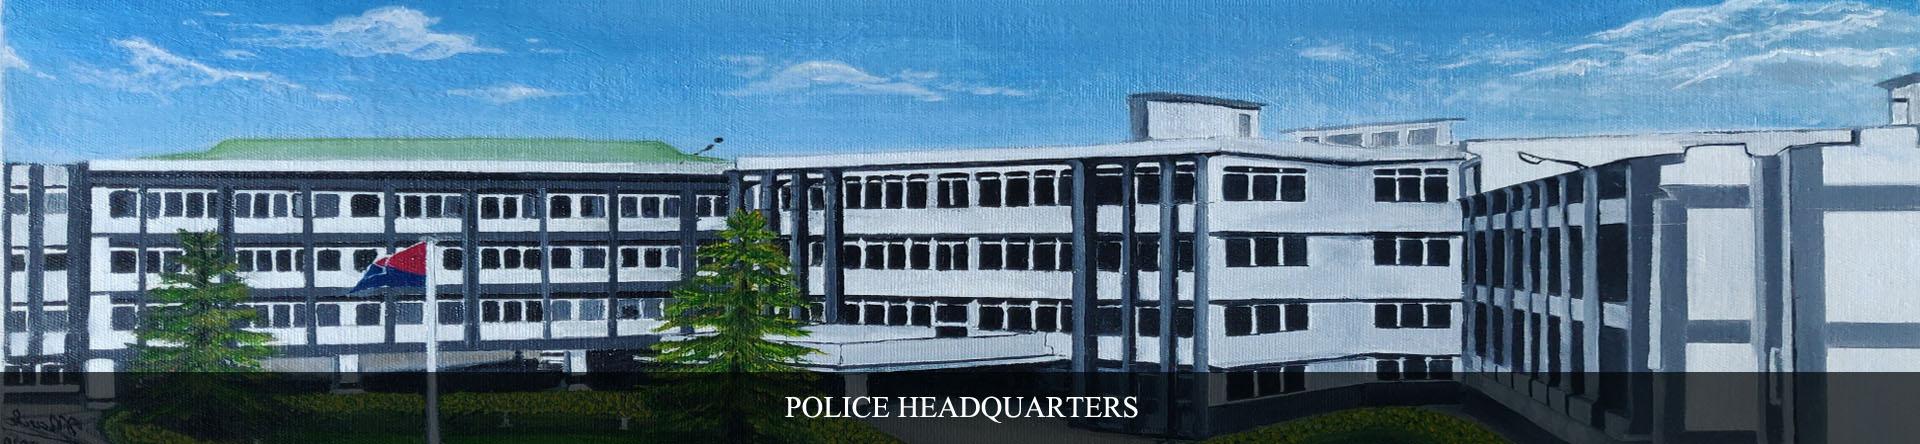 Meghalaya Police Recruitment For 1015 Vacancy 2019 at megpolice.gov.in 3